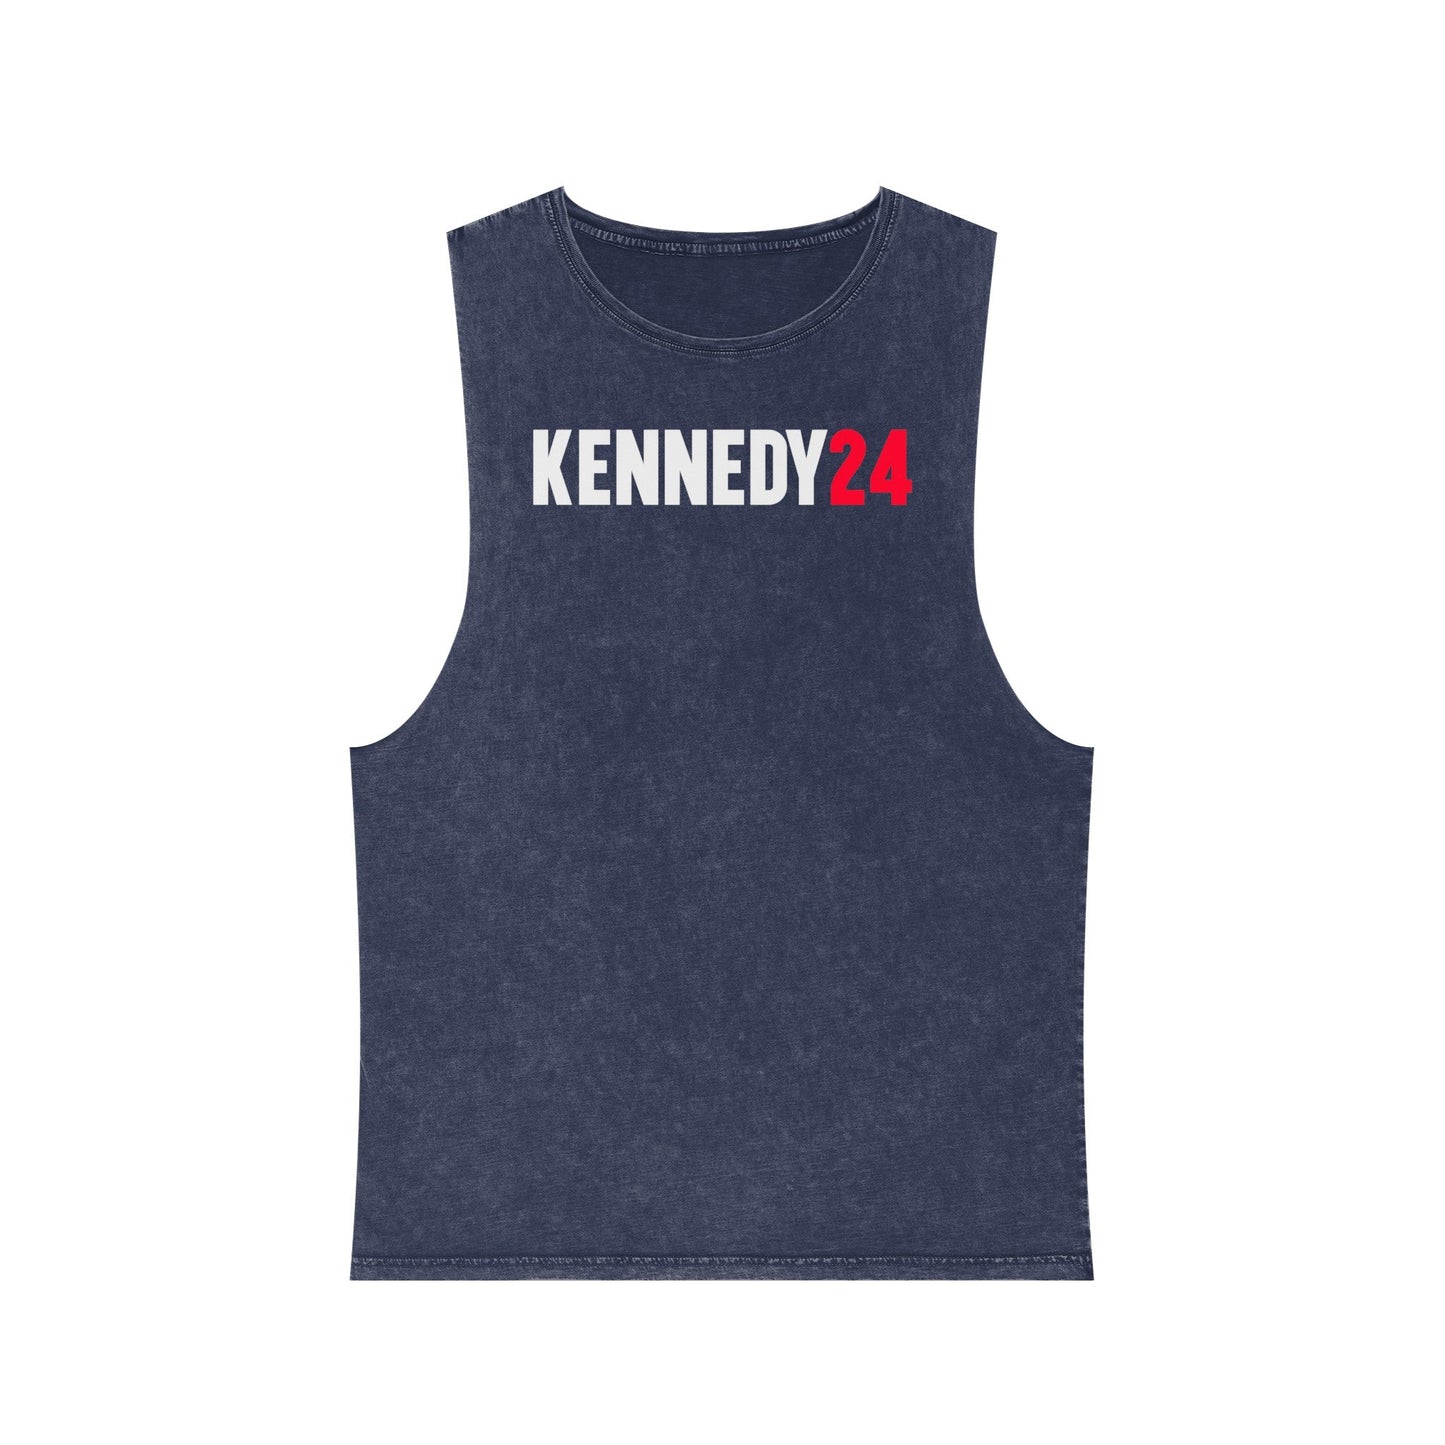 No Shirt, No Shoes, No Secret Service Unisex Stonewash Tank Top - Team Kennedy Official Merchandise